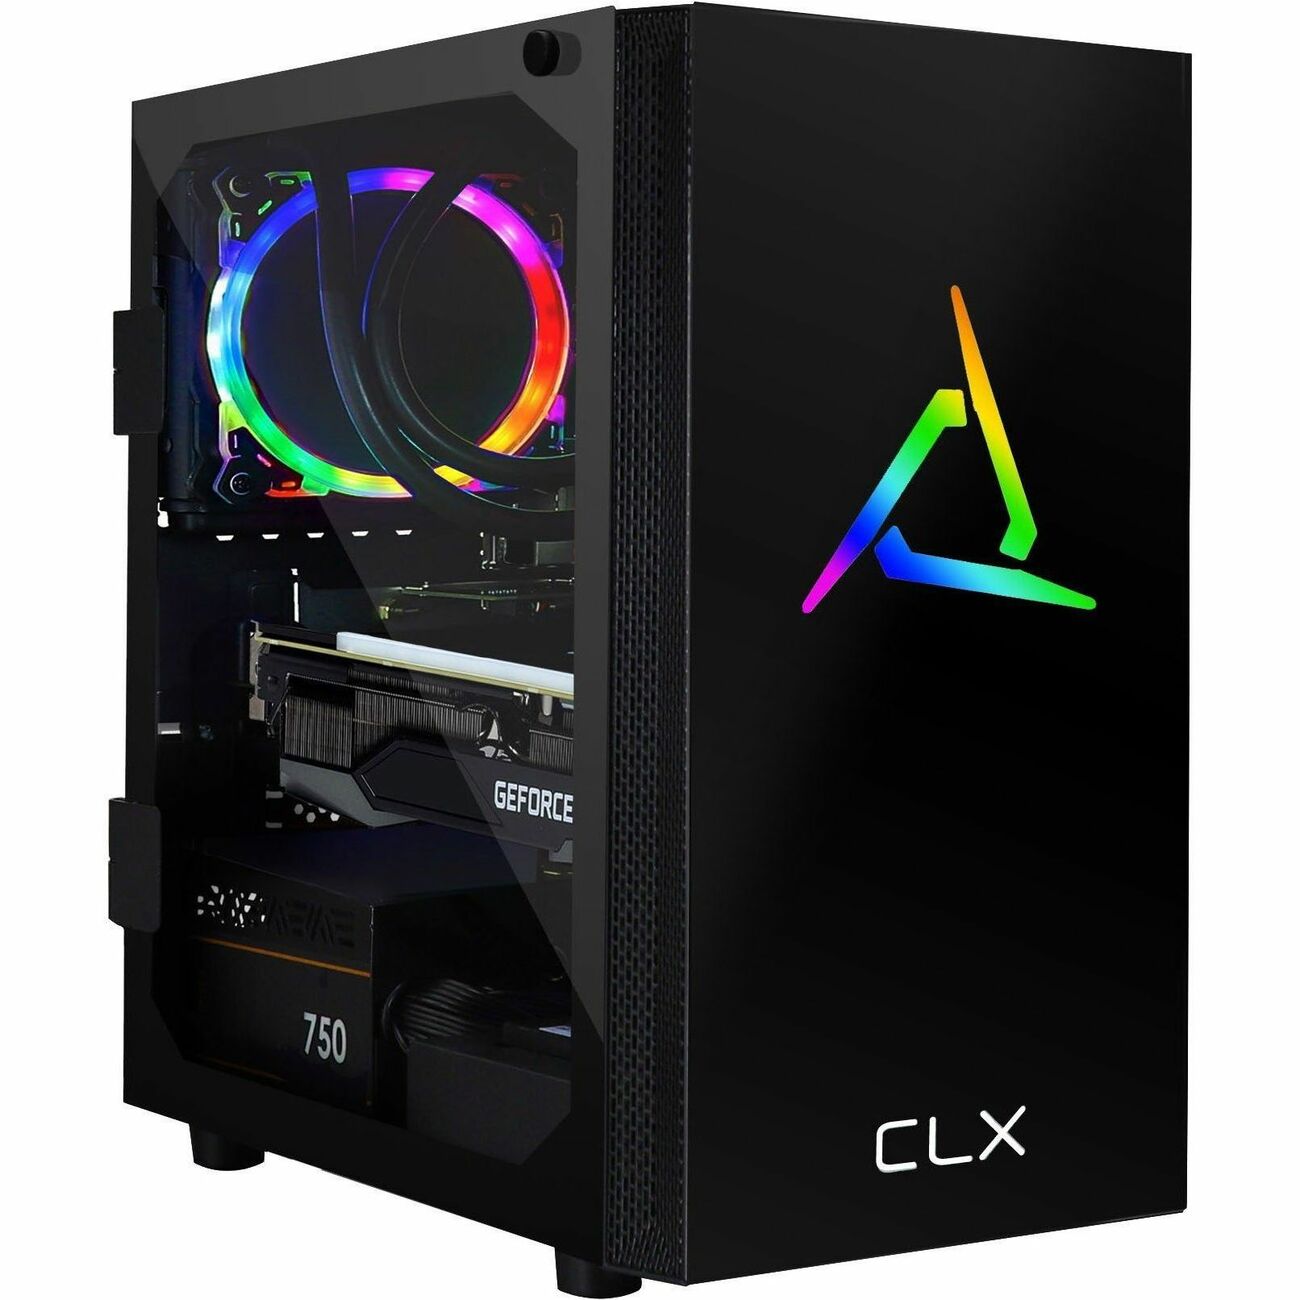 CLX SET VR-Ready Gaming Desktop - Liquid Cooled AMD Ryzen 9 5900X 3.7GHz 12- Core Processor, 16GB DDR4 Memory, GeForce RTX 3060 Ti 8GB GDDR6 Graphics,  480GB SSD, 2TB HDD, WiFi, Windows 11